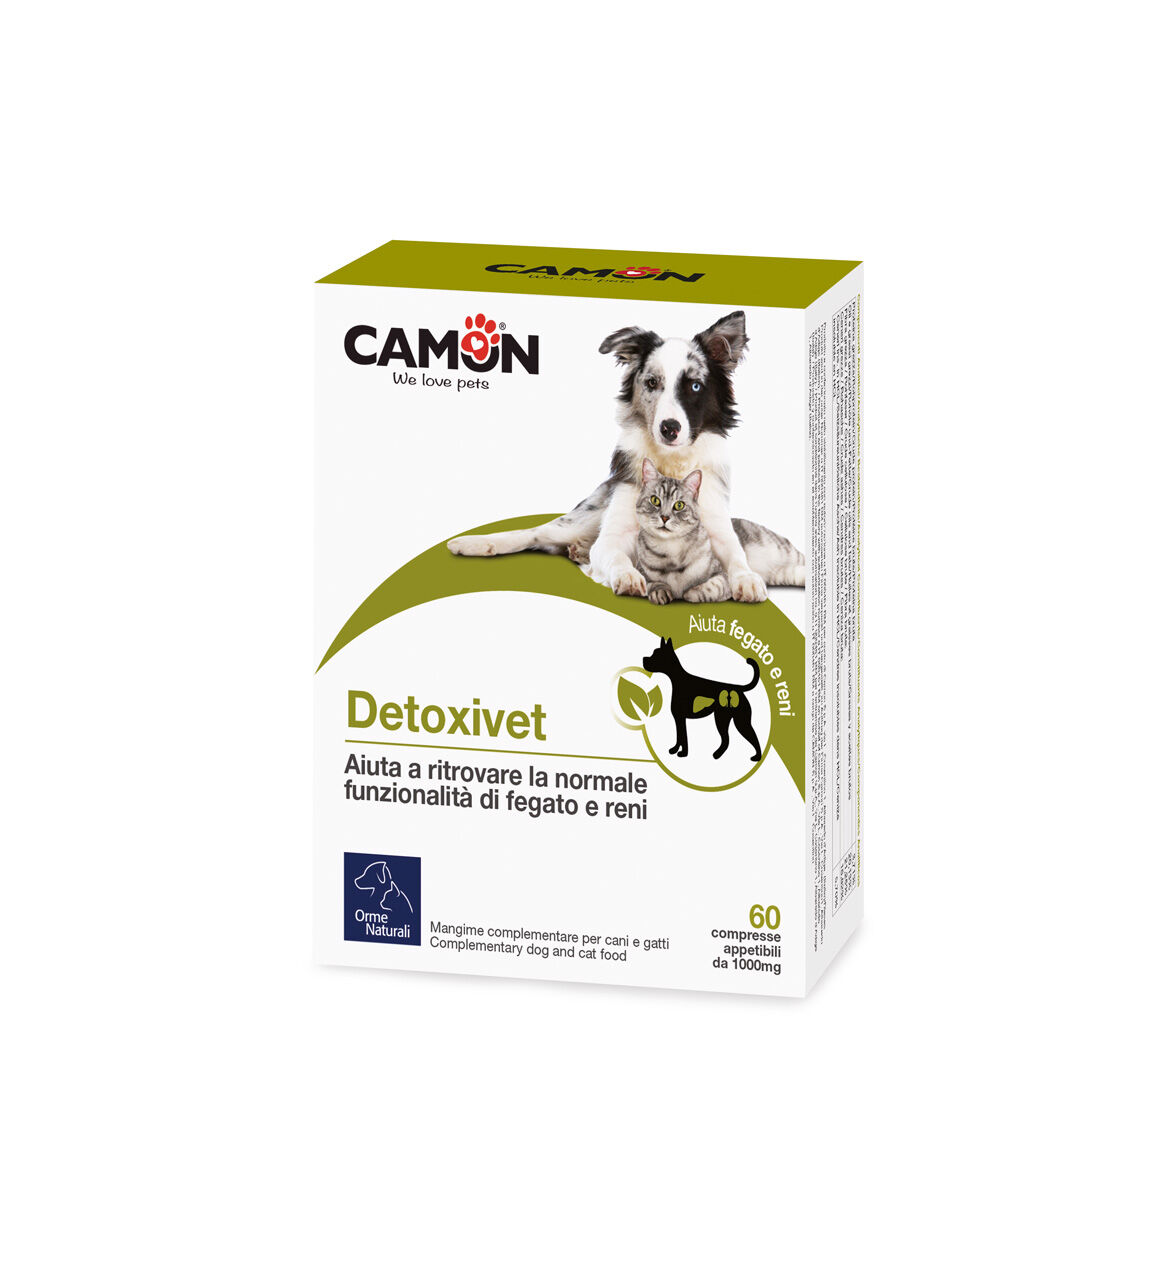 Camon-Orme-Naturali-Detoxivet-fuer-Katze-Hund-entgiftet-CO-G885